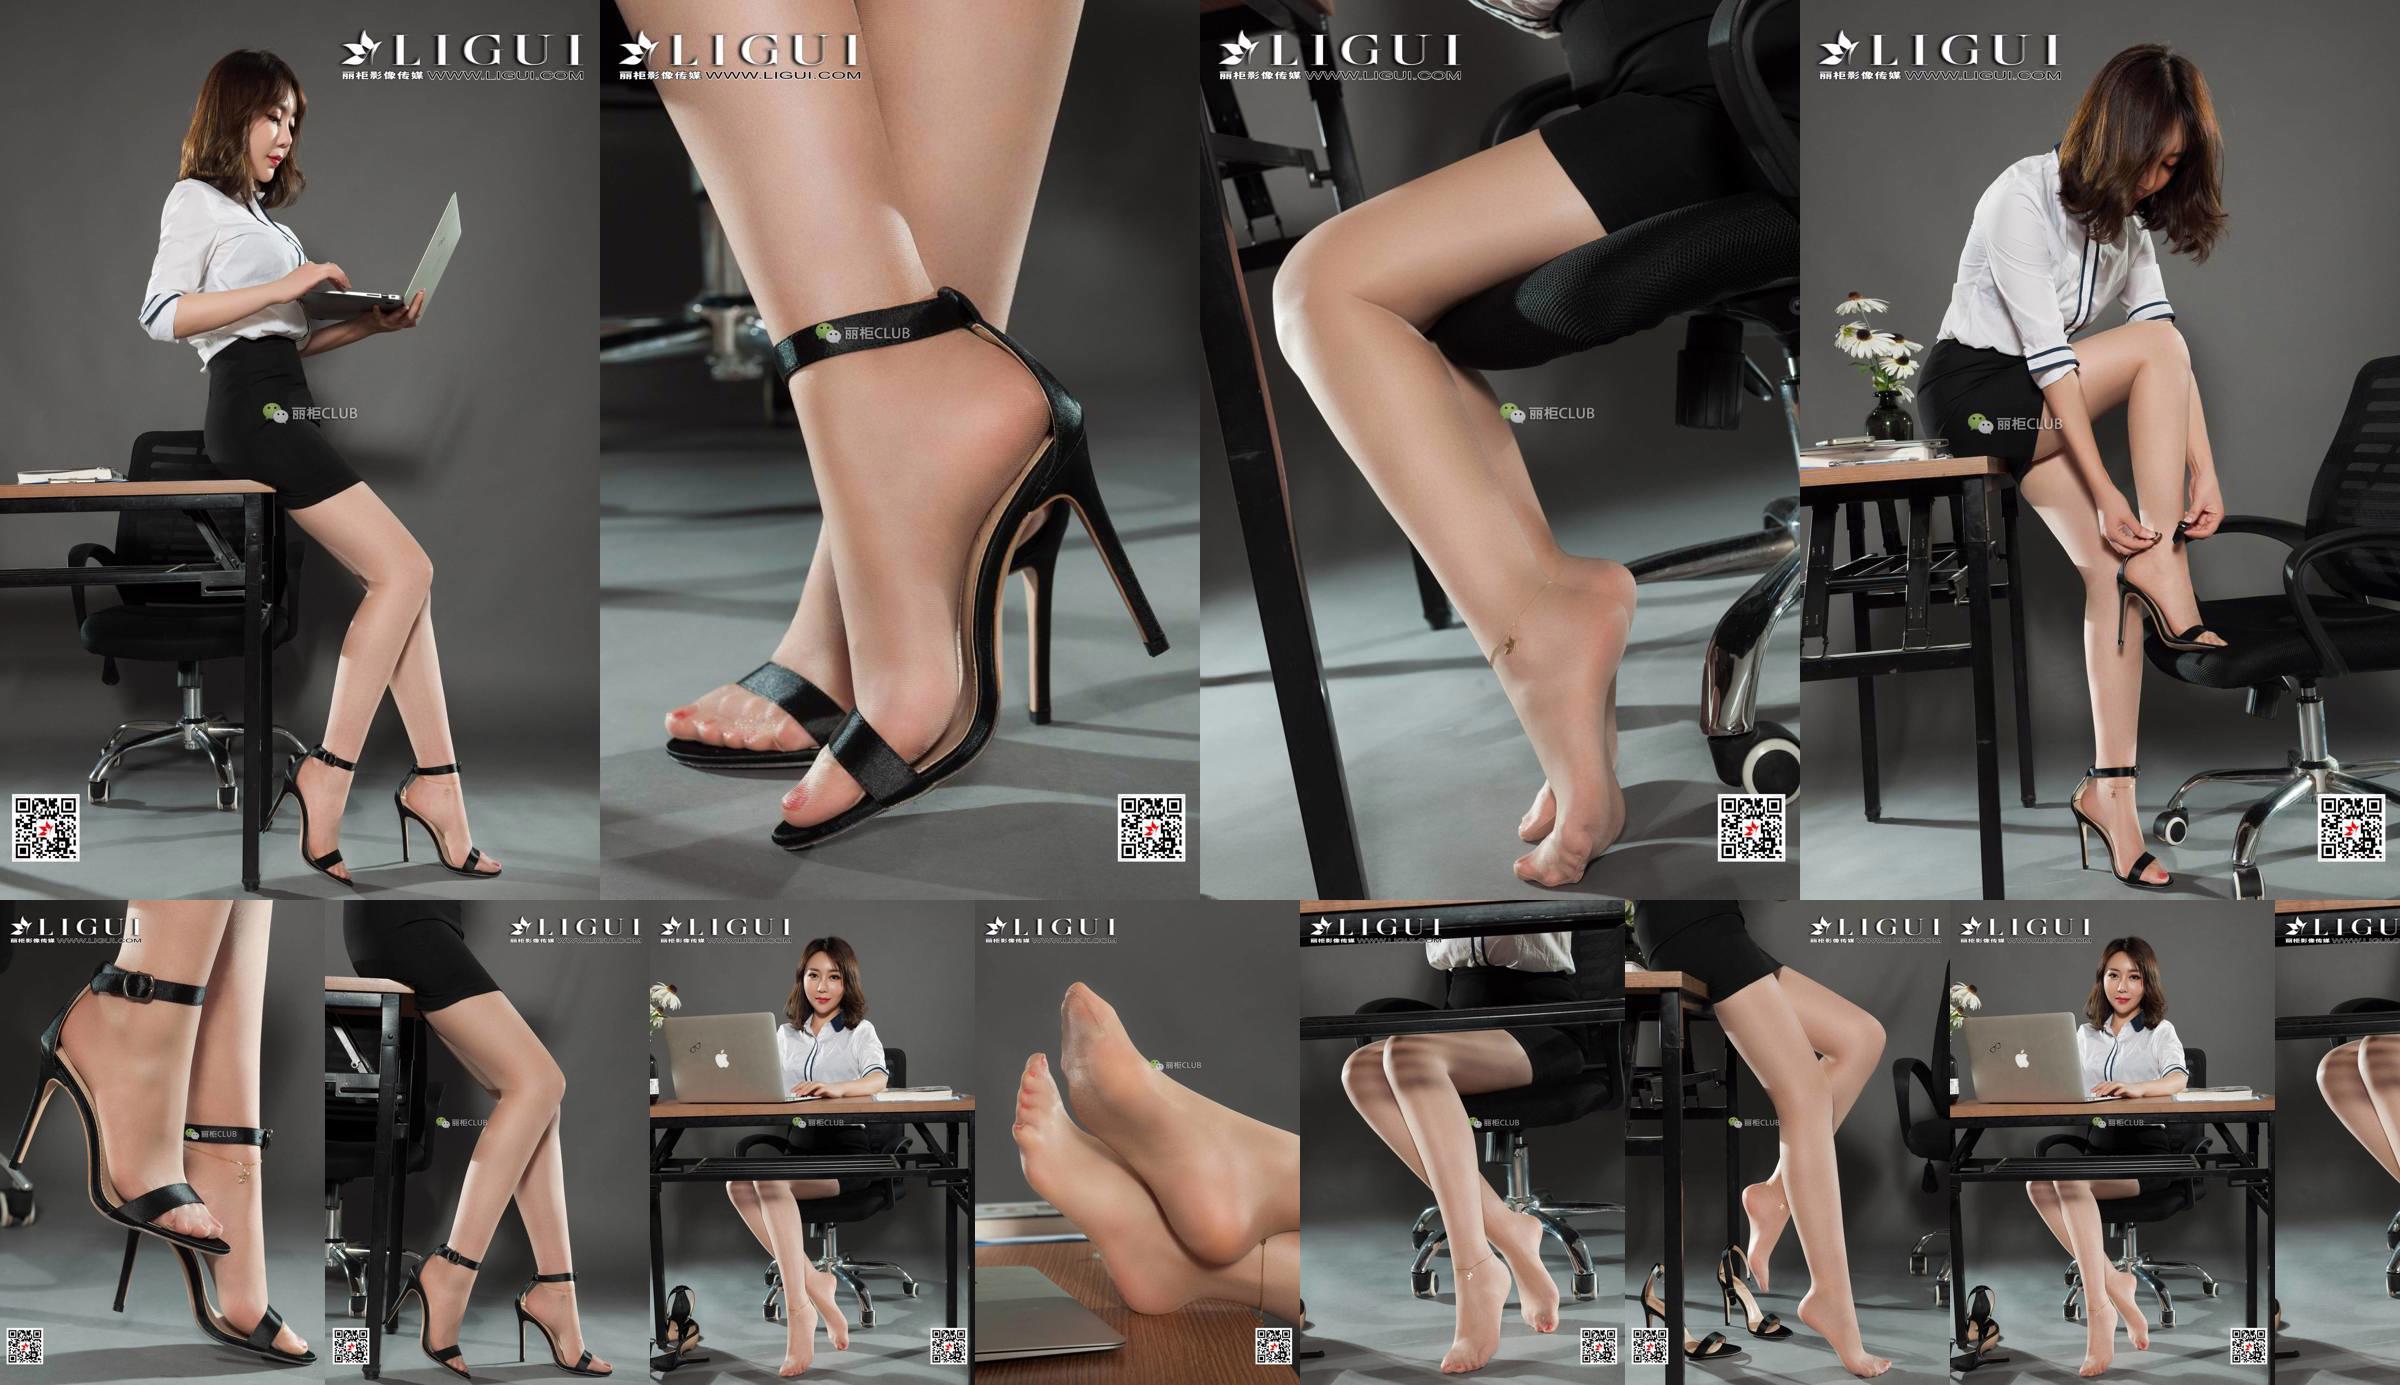 Leg model Li Mengying "High Heels and Beautiful Feet" [LIGUI] Internet Beauty No.7d03d1 Page 3